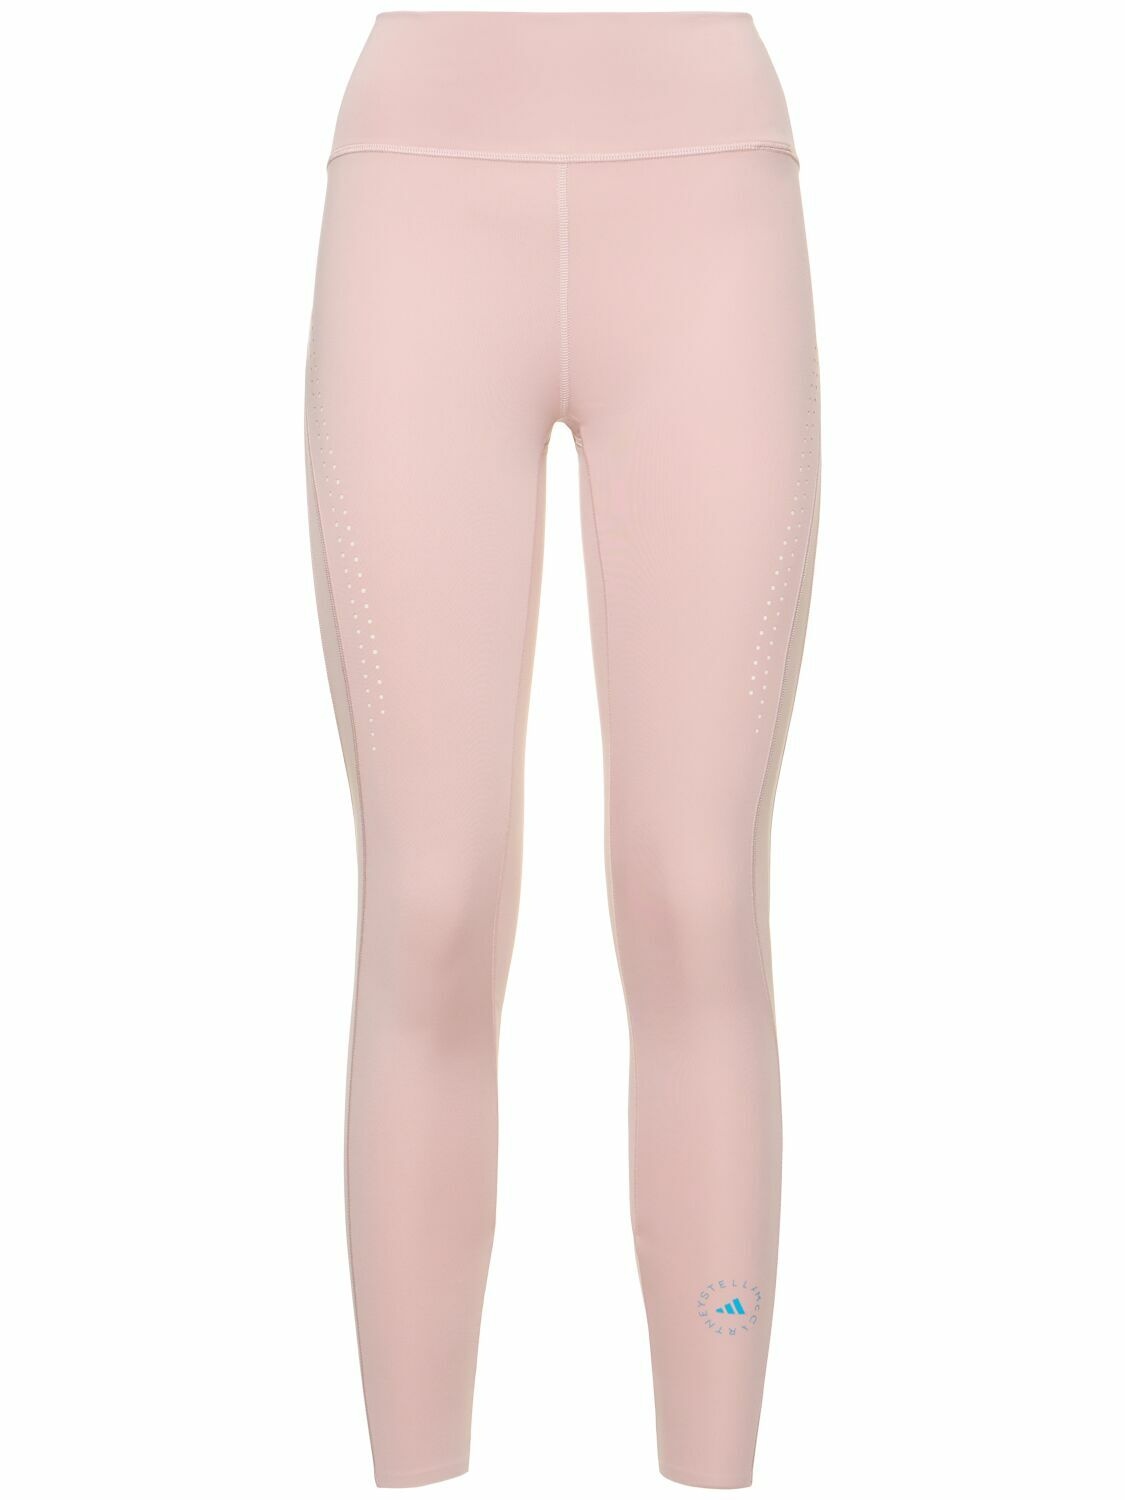 TrueStrength high-rise leggings in pink - Adidas By Stella Mc